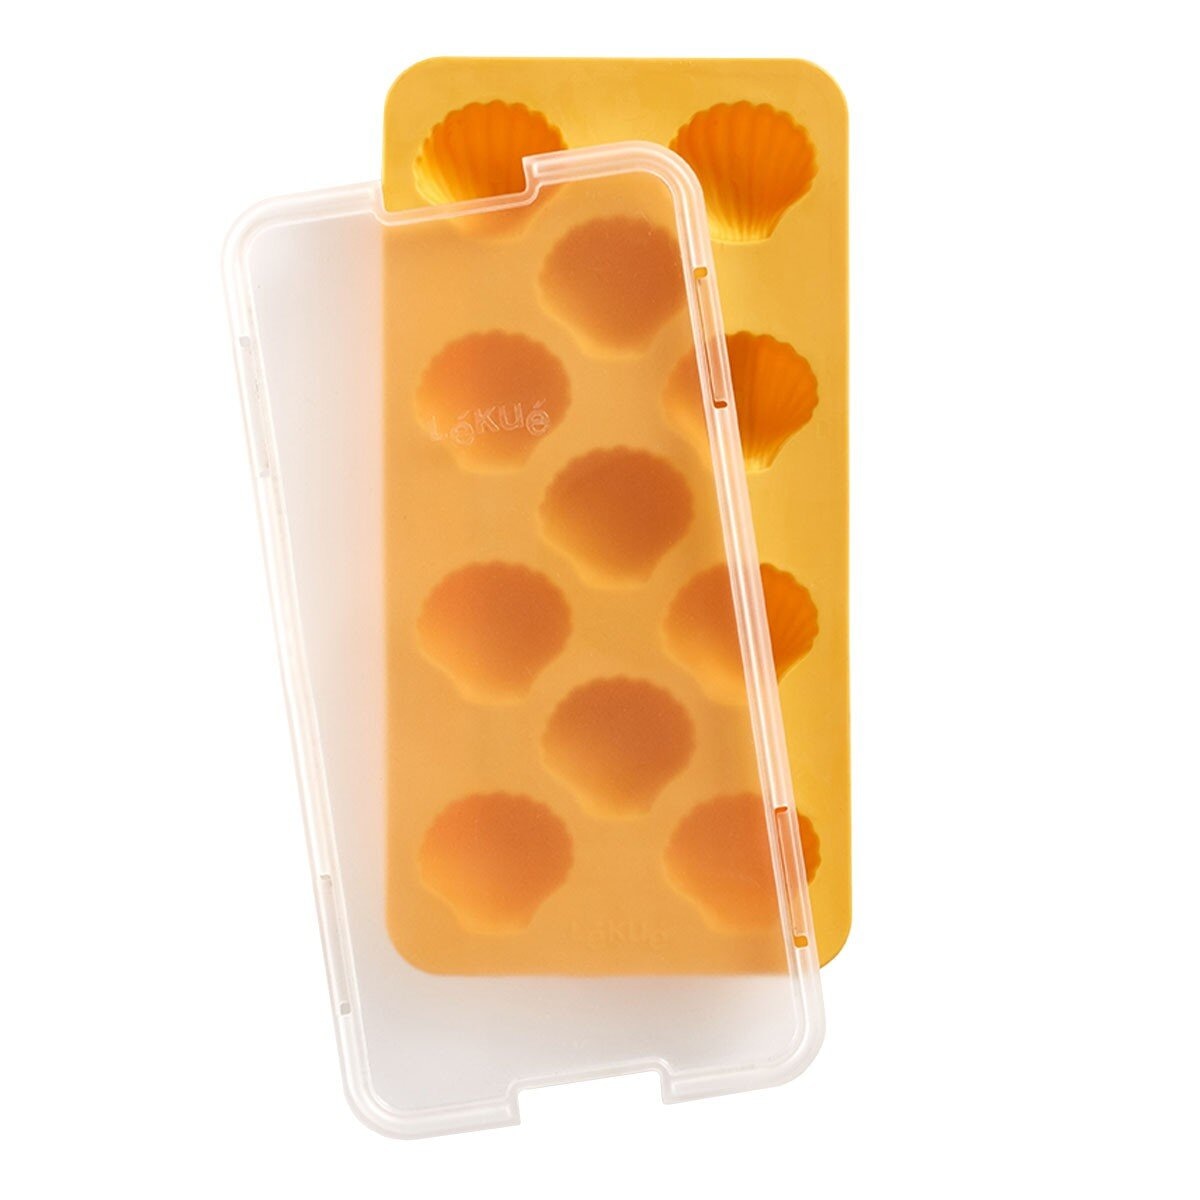 Lekue 貝殼形狀製冰盒